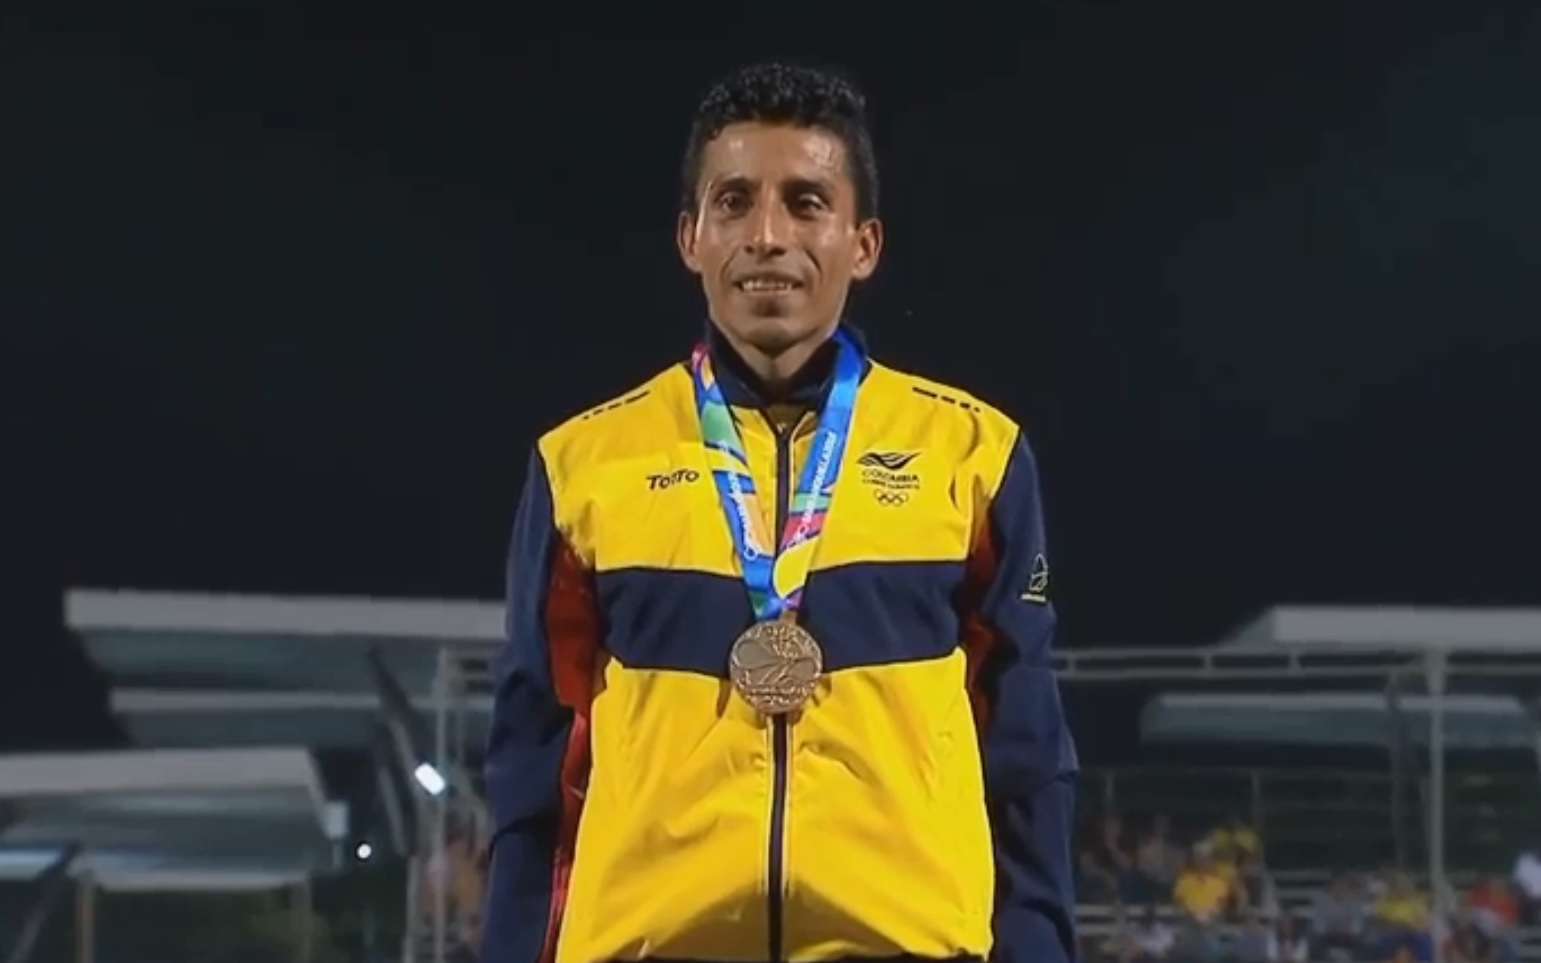 Mauricio Gonzalez centroamericanos oro